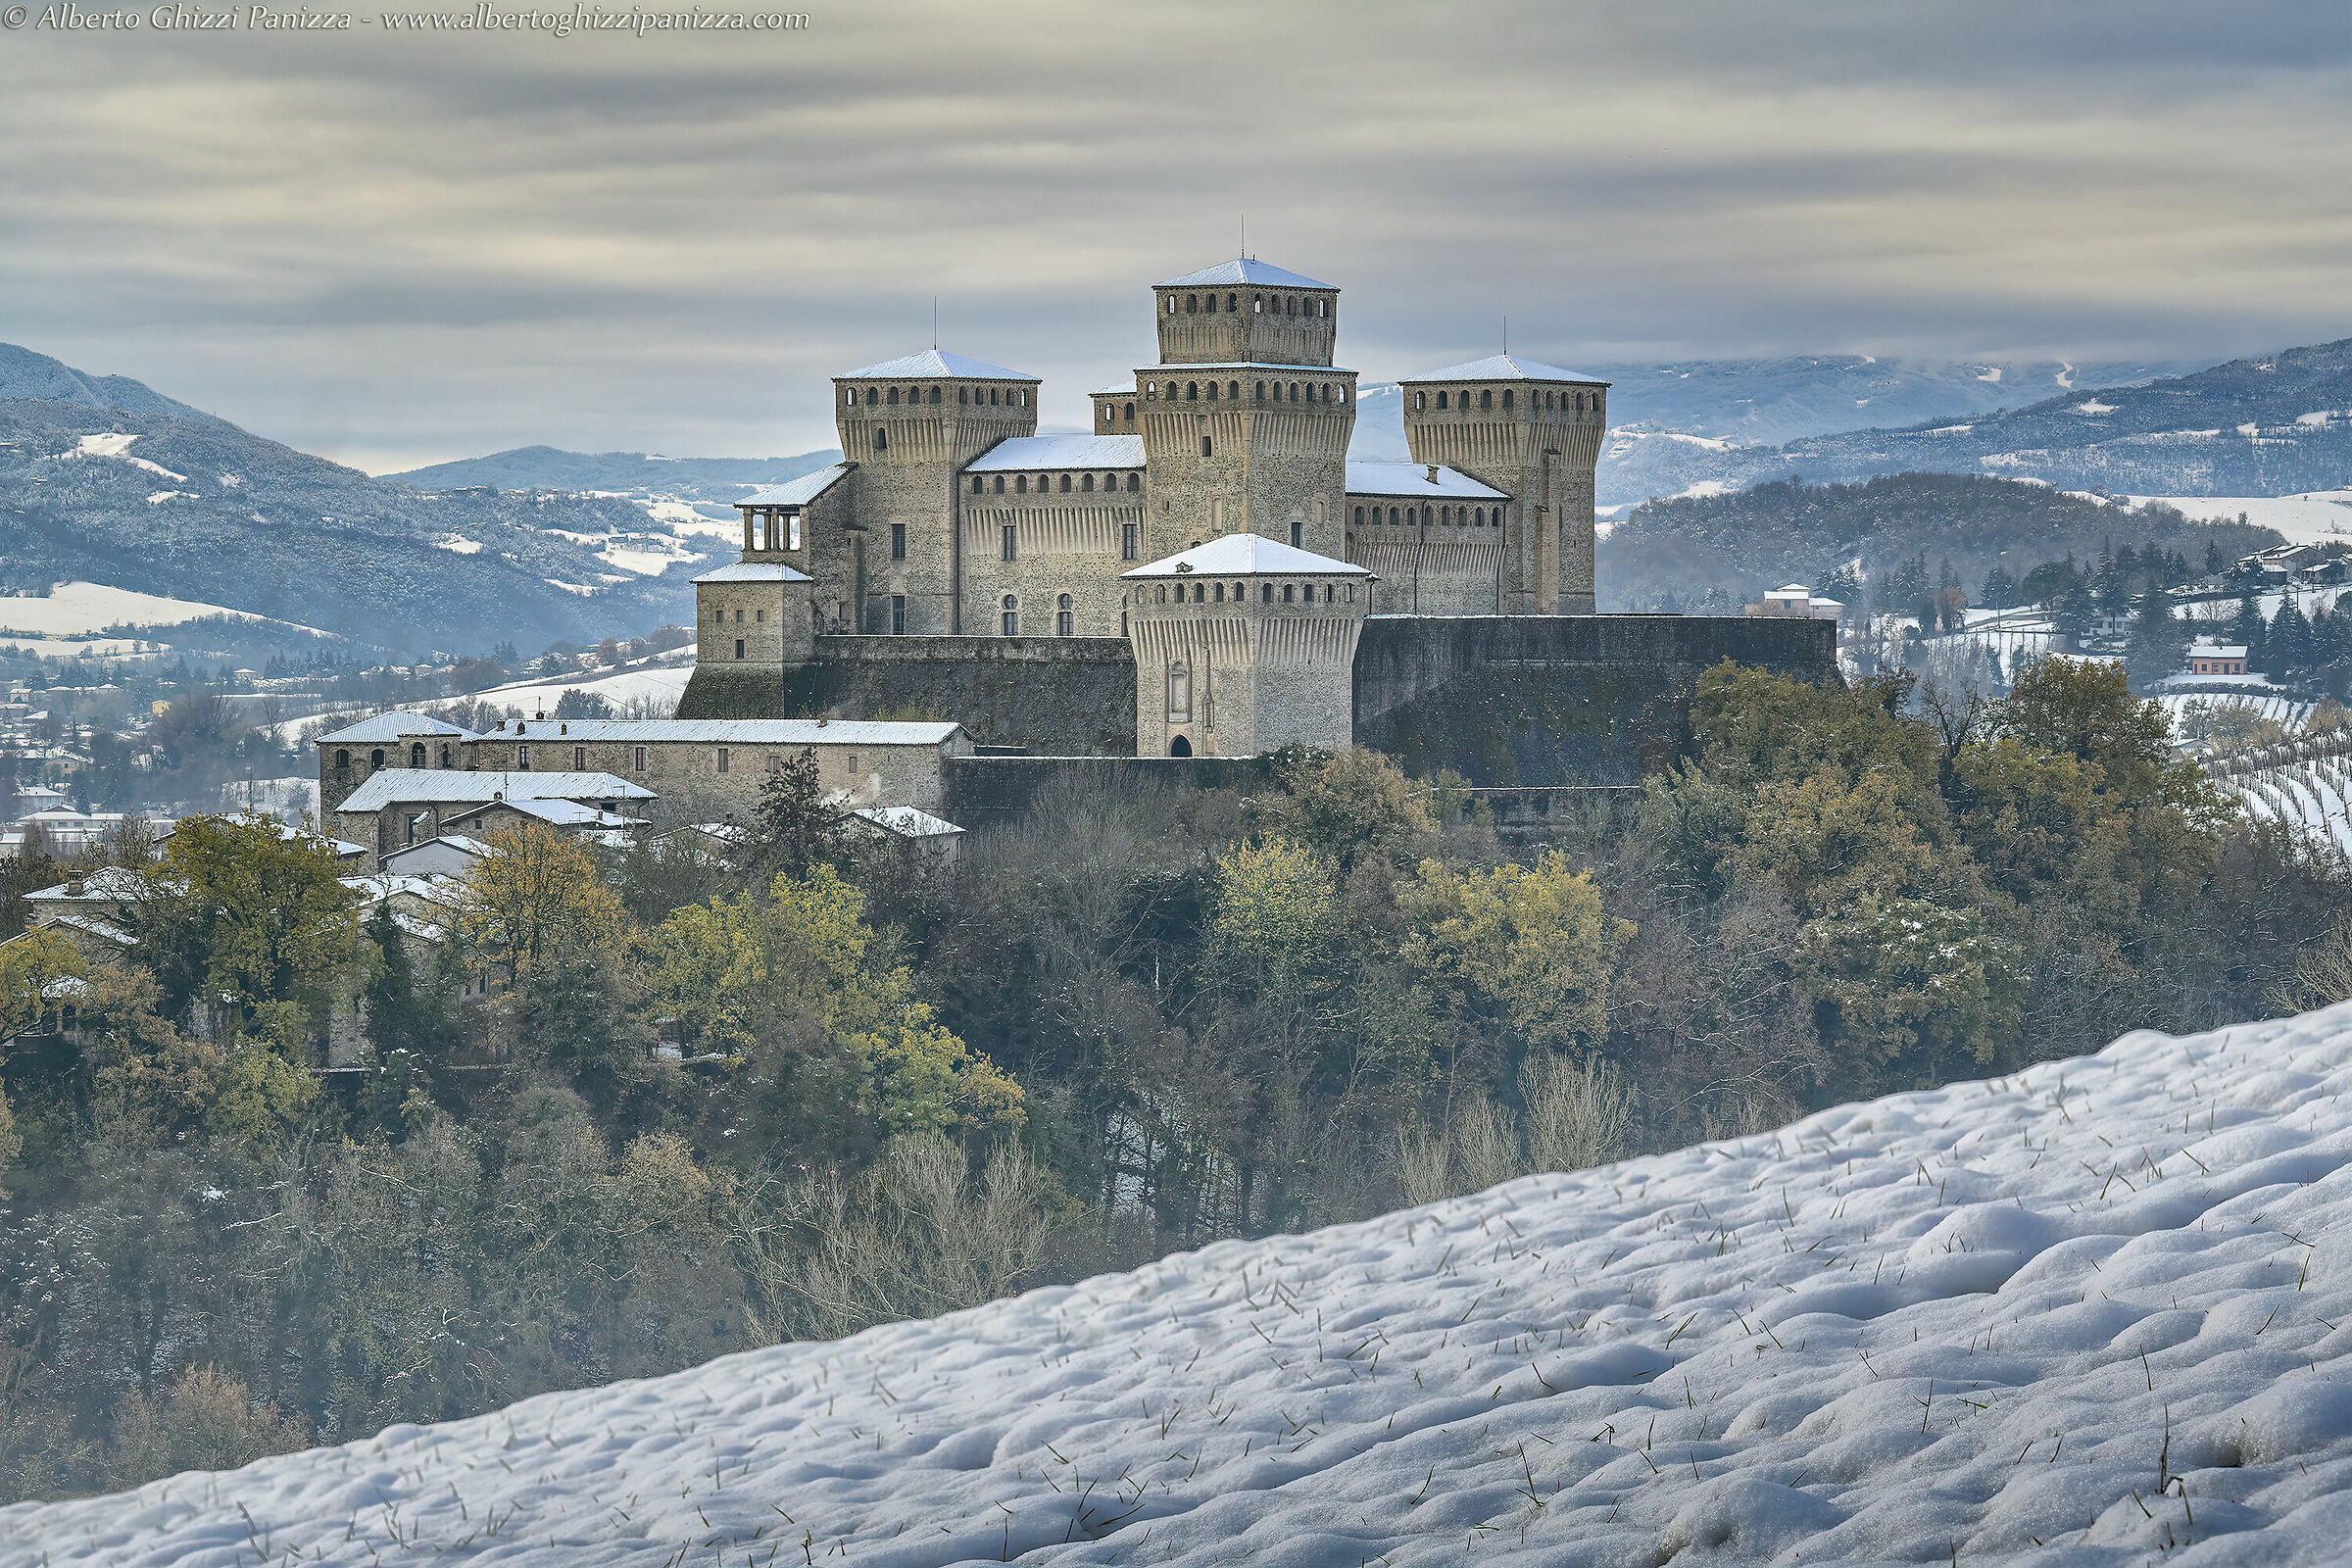 Nevicata al Castello di Torrechiara...